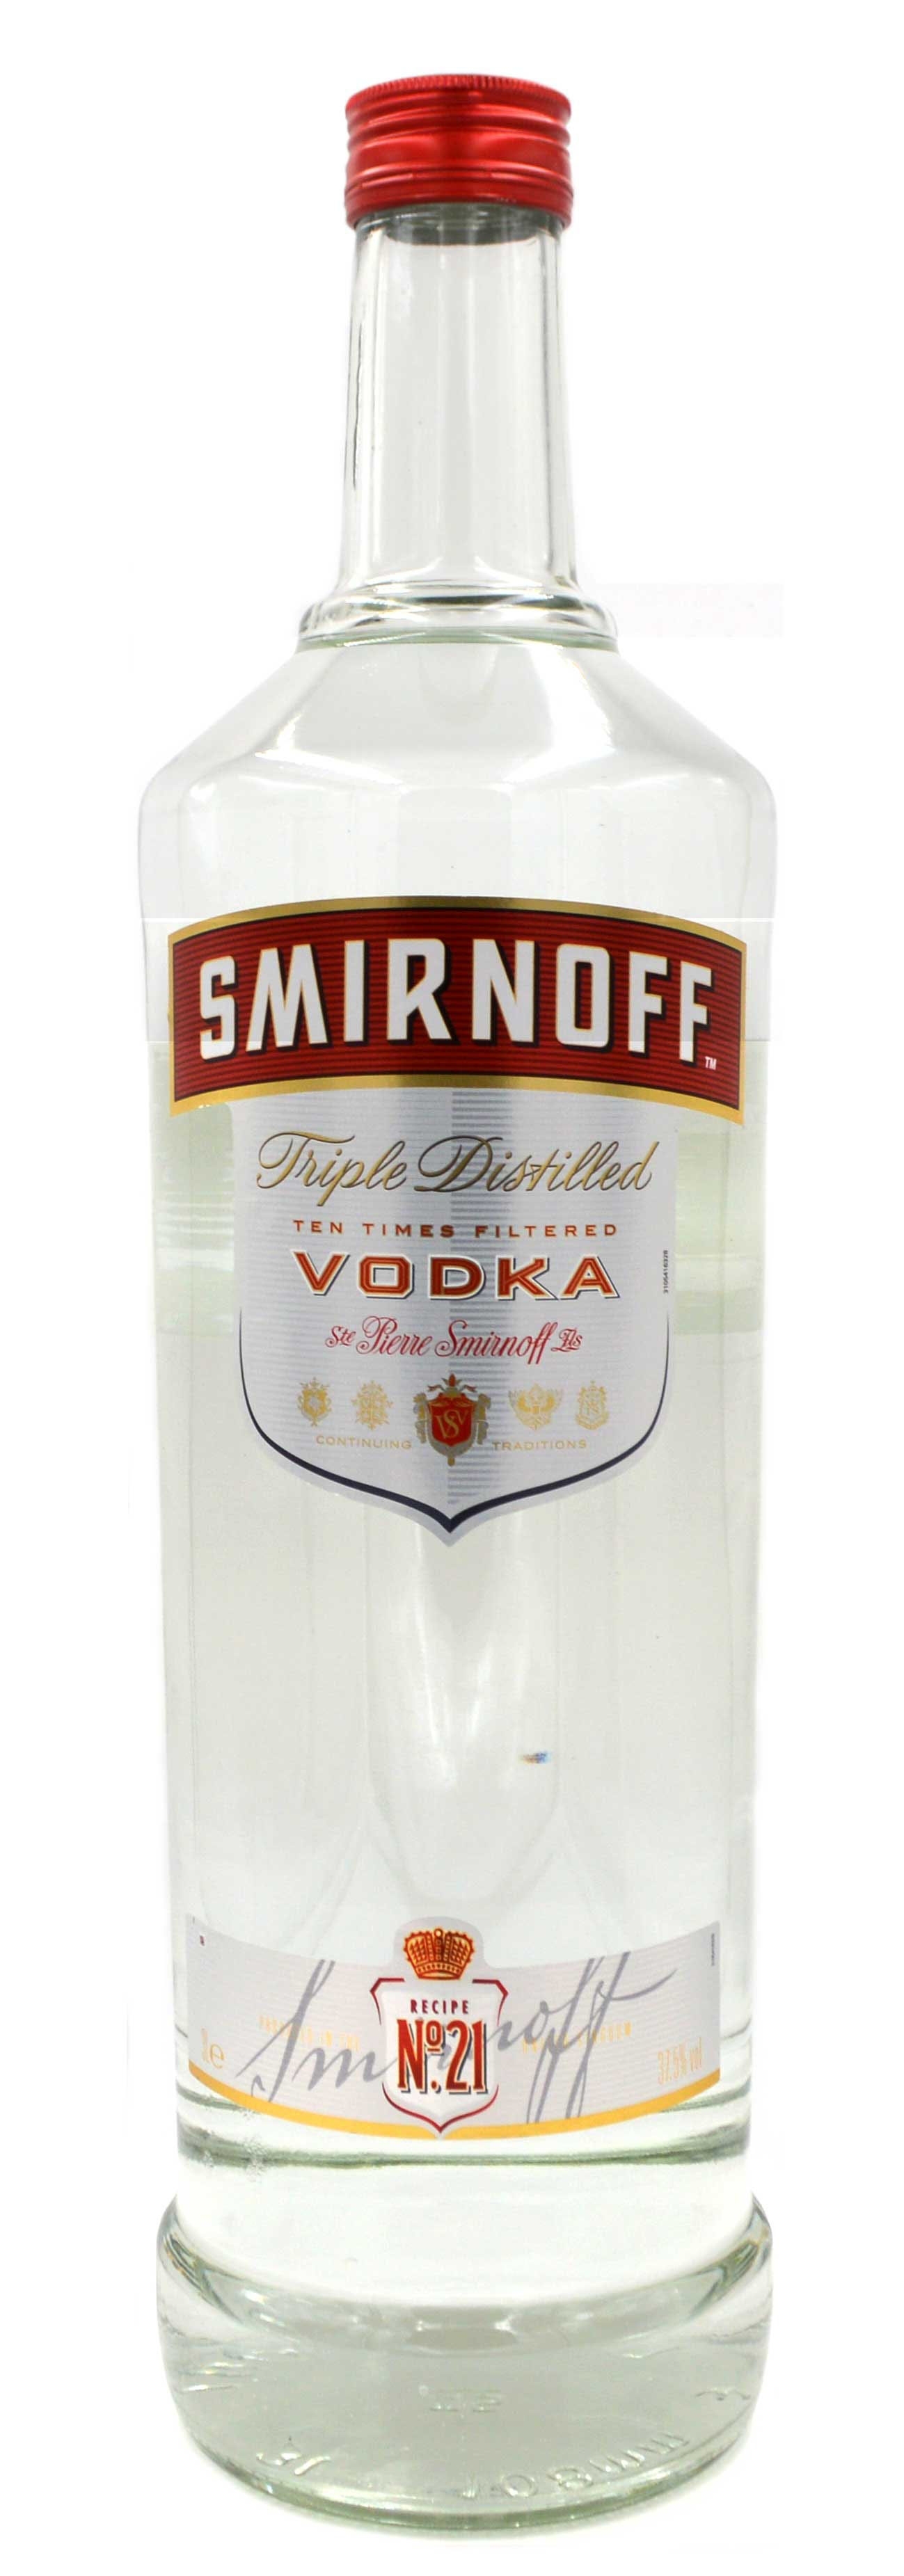 Smirnoff Vodka Red Label big bottle 3.0l